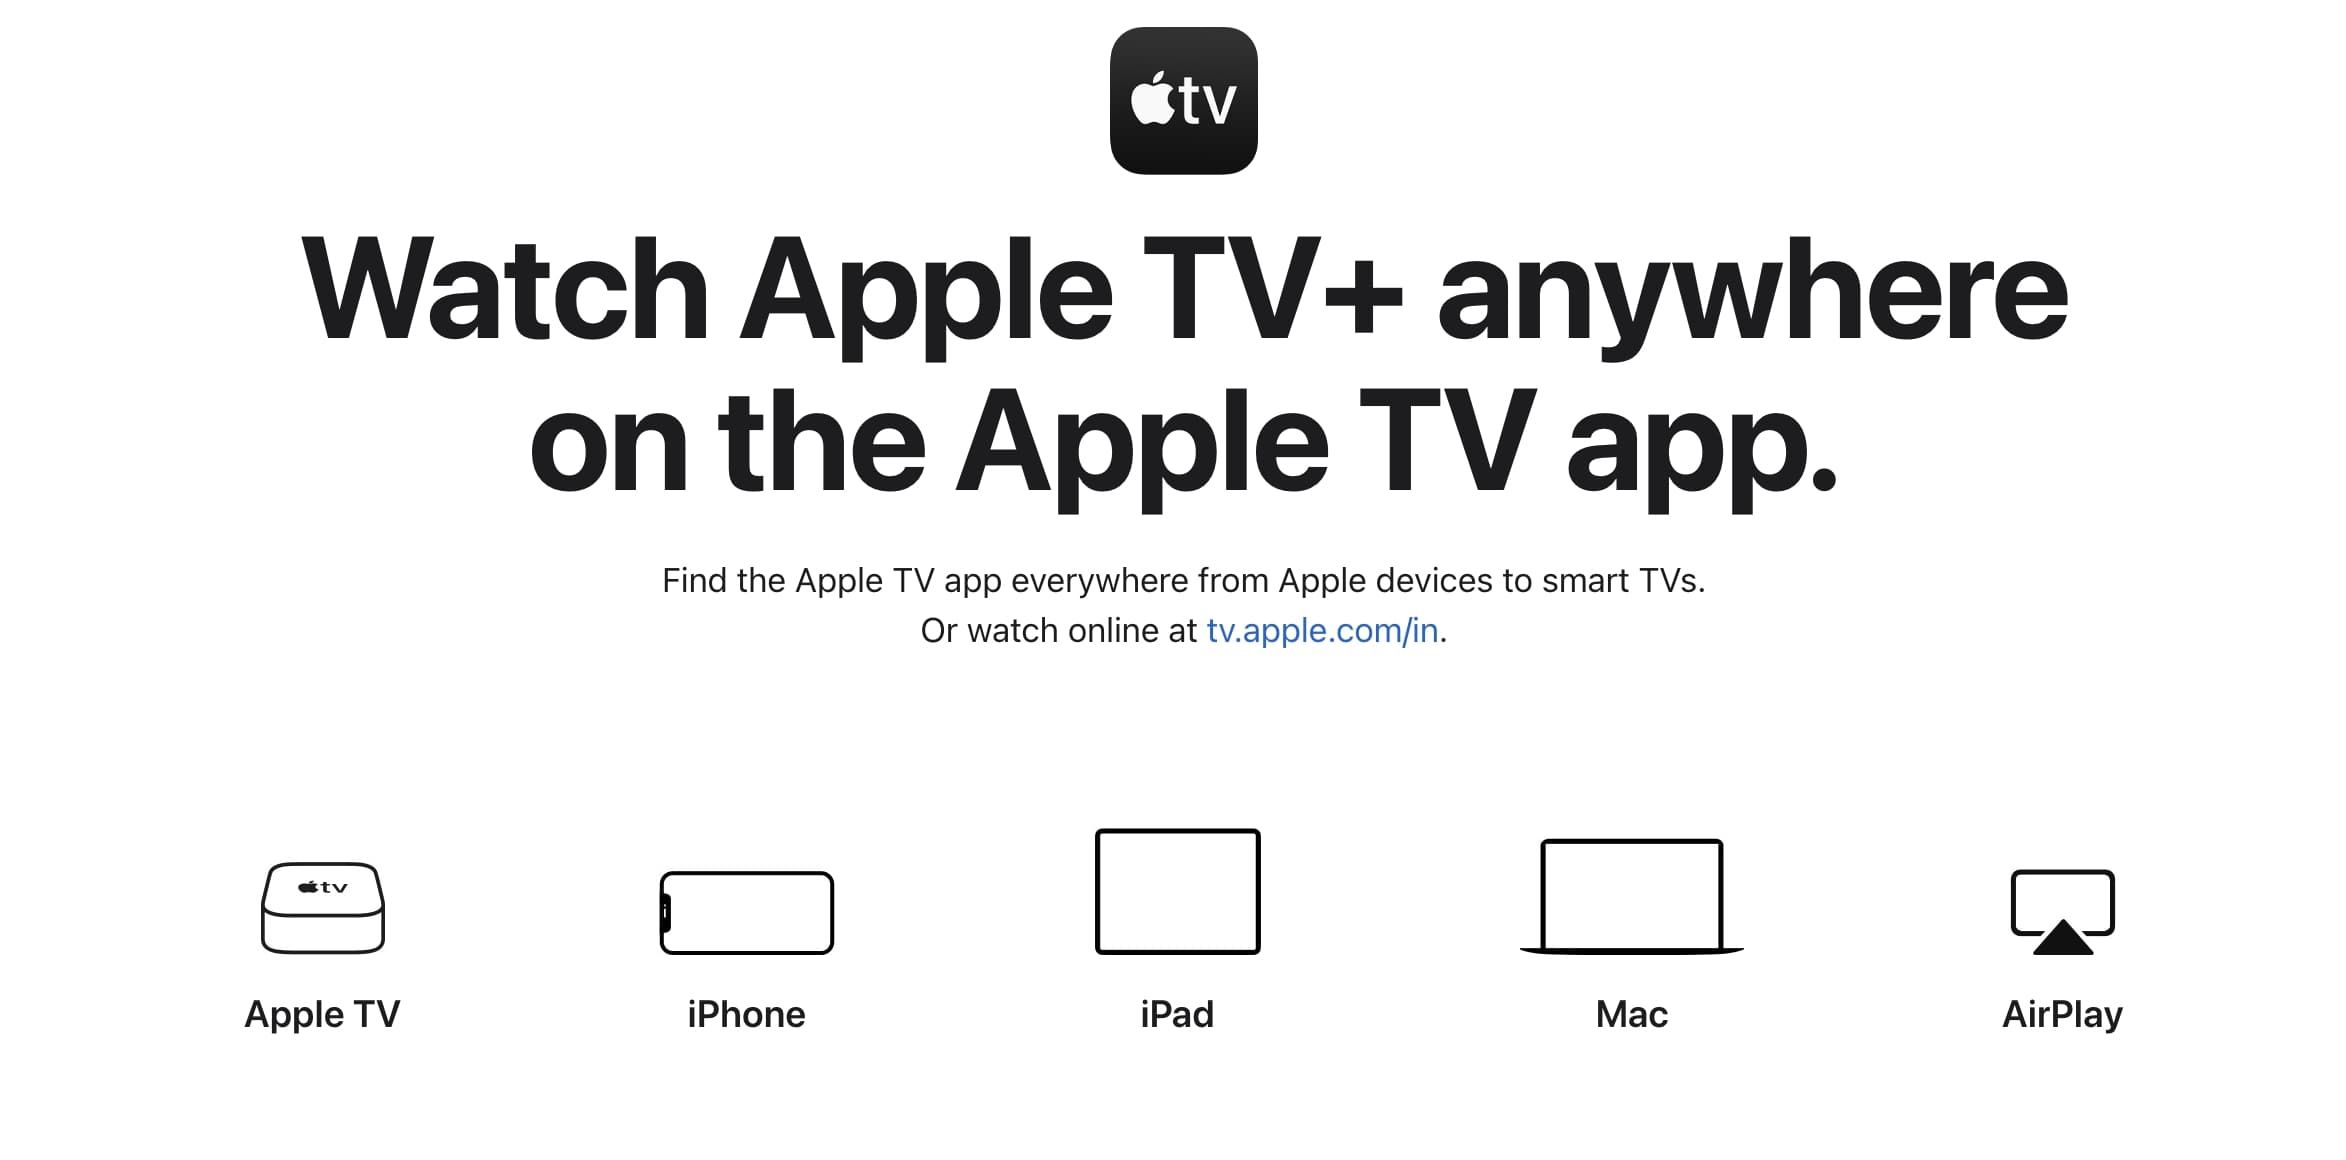 Apple TV+ Devices availability